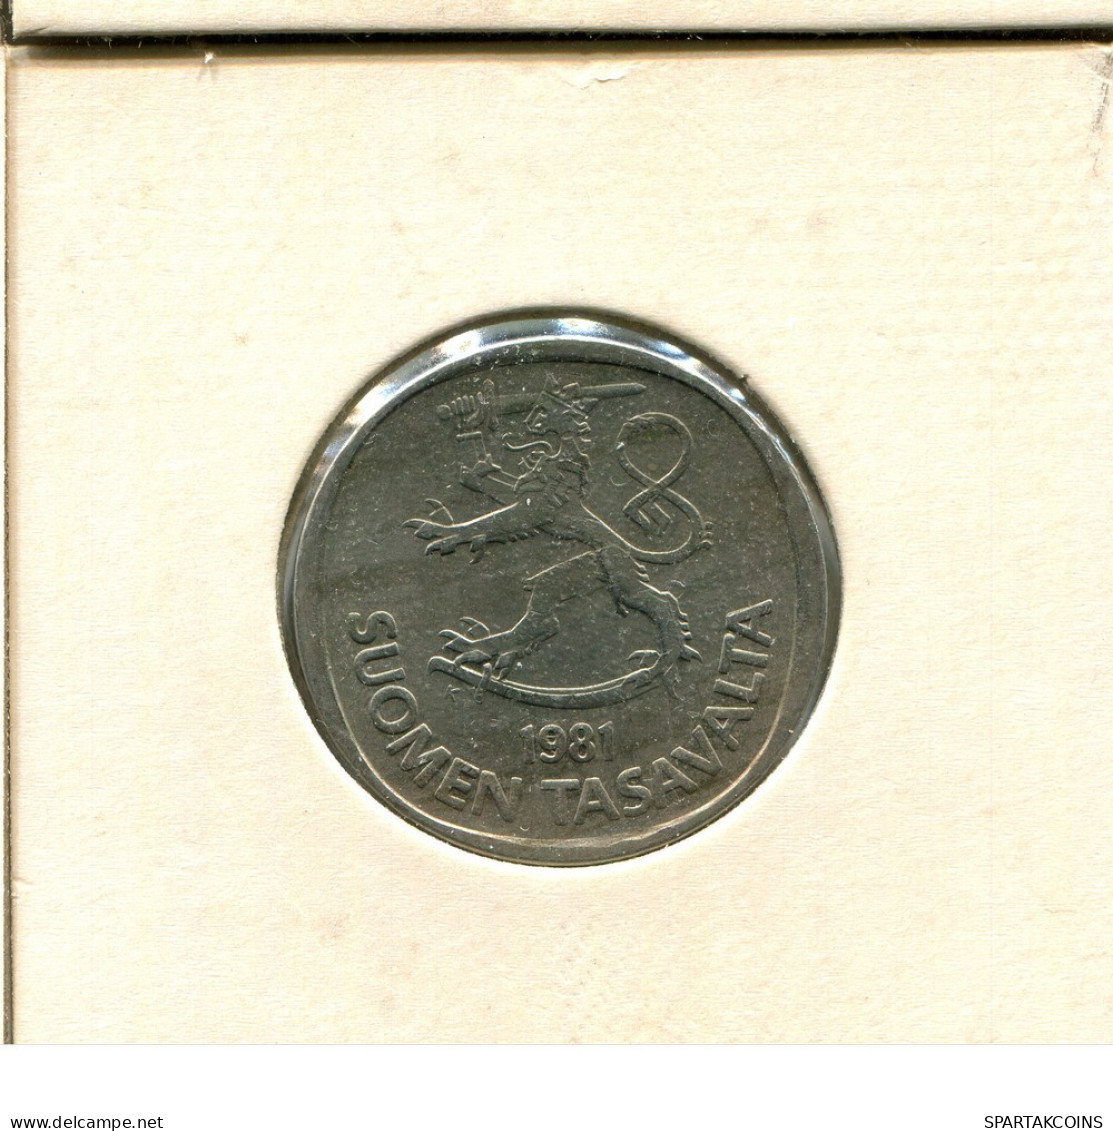 1 MARKKA 1981 FINLAND Coin #AS750.U.A - Finnland